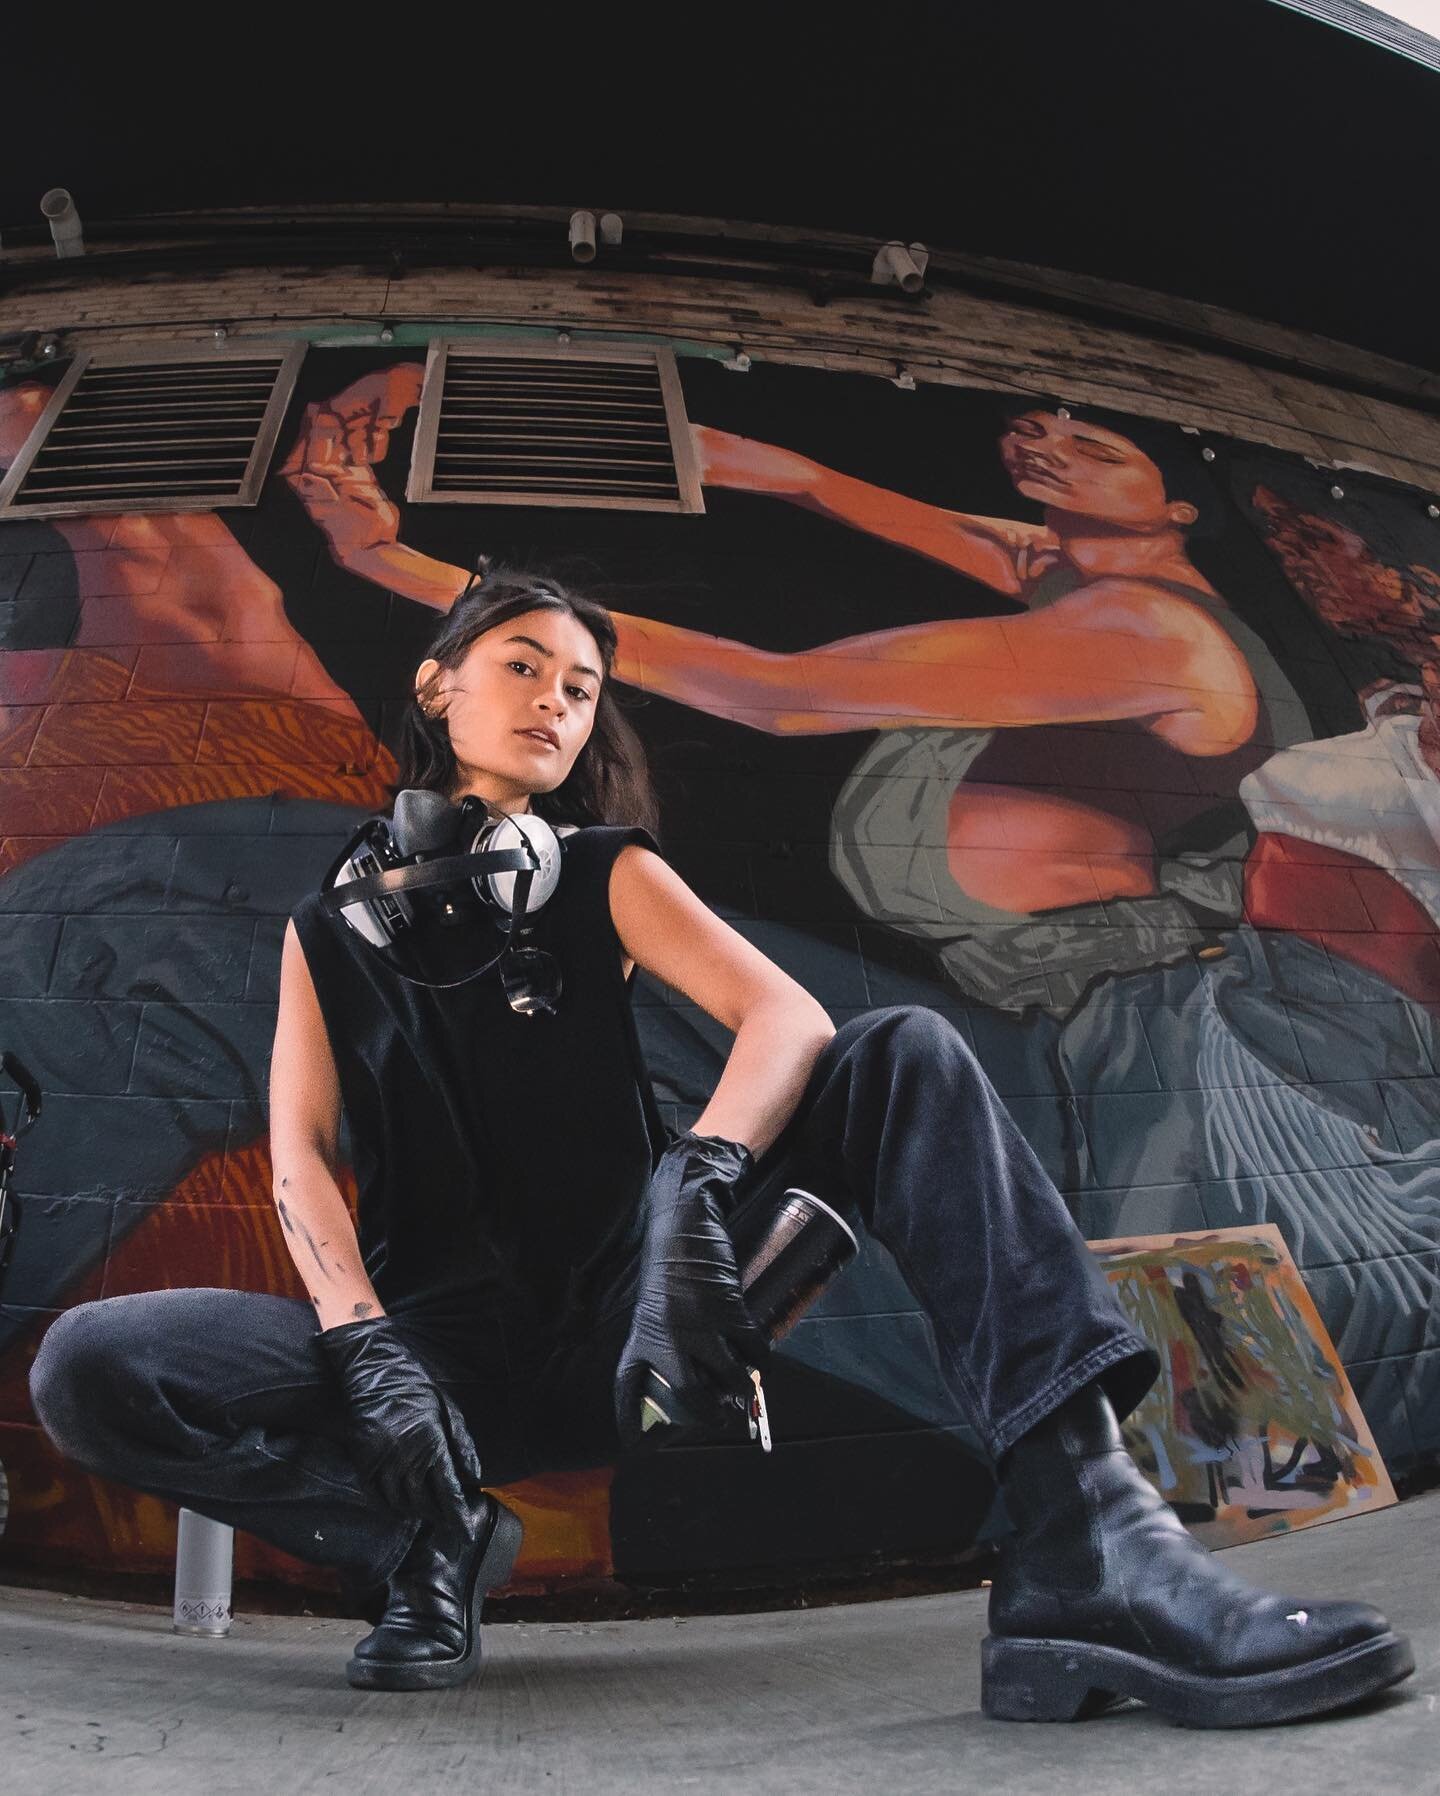 stories saw it first 

w/ @seekecreative 😈

#blackcatalley #blackcatmke #muralist #muralpainting #streetart